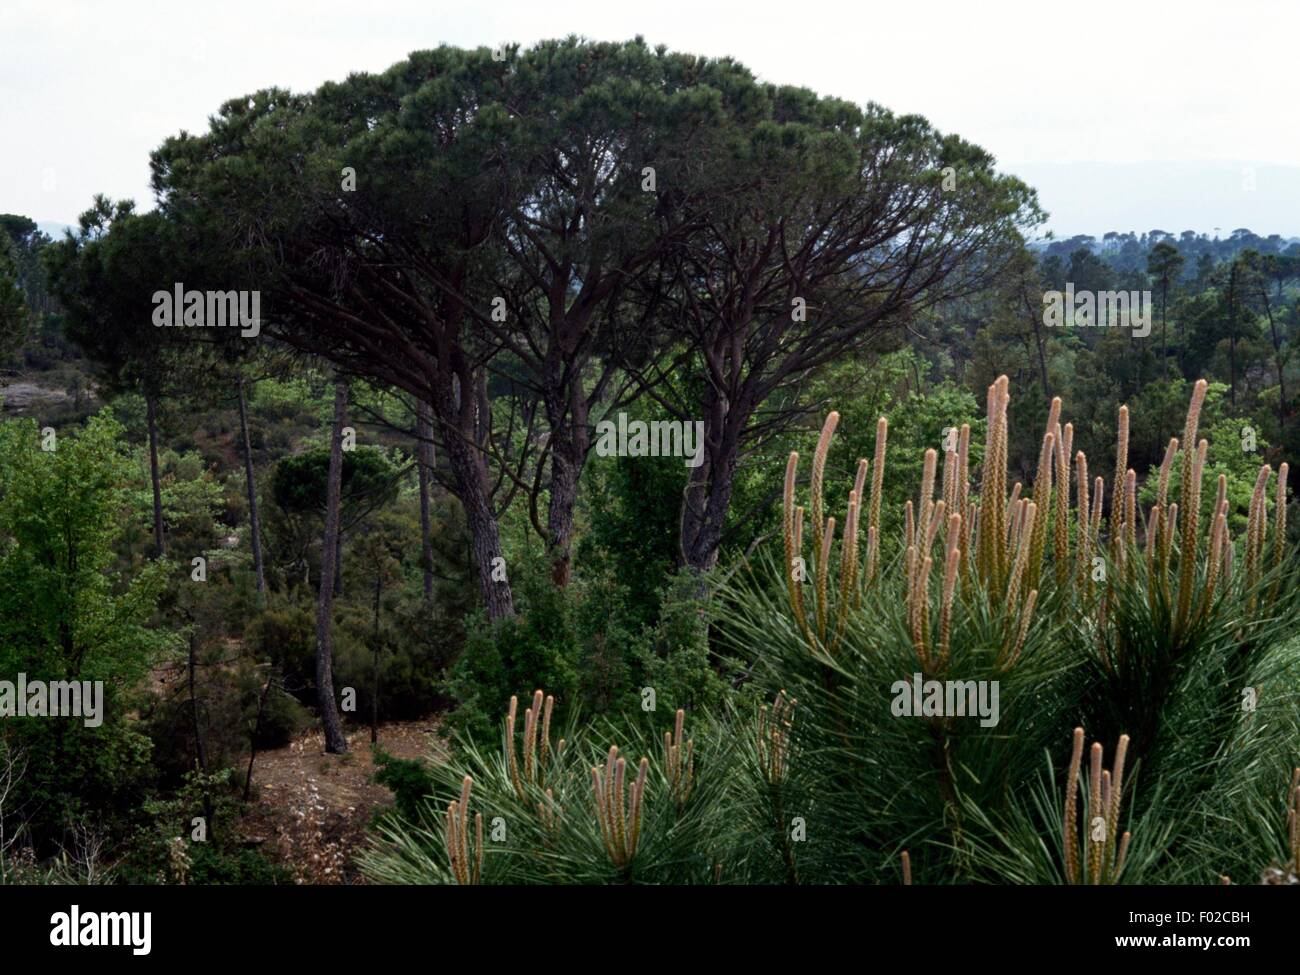 Maquis shrubland, Regional Nature Park of the Camargue (Parc naturel regional de Camargue), Provence-Alpes-Cote d'Azur, France. Stock Photo